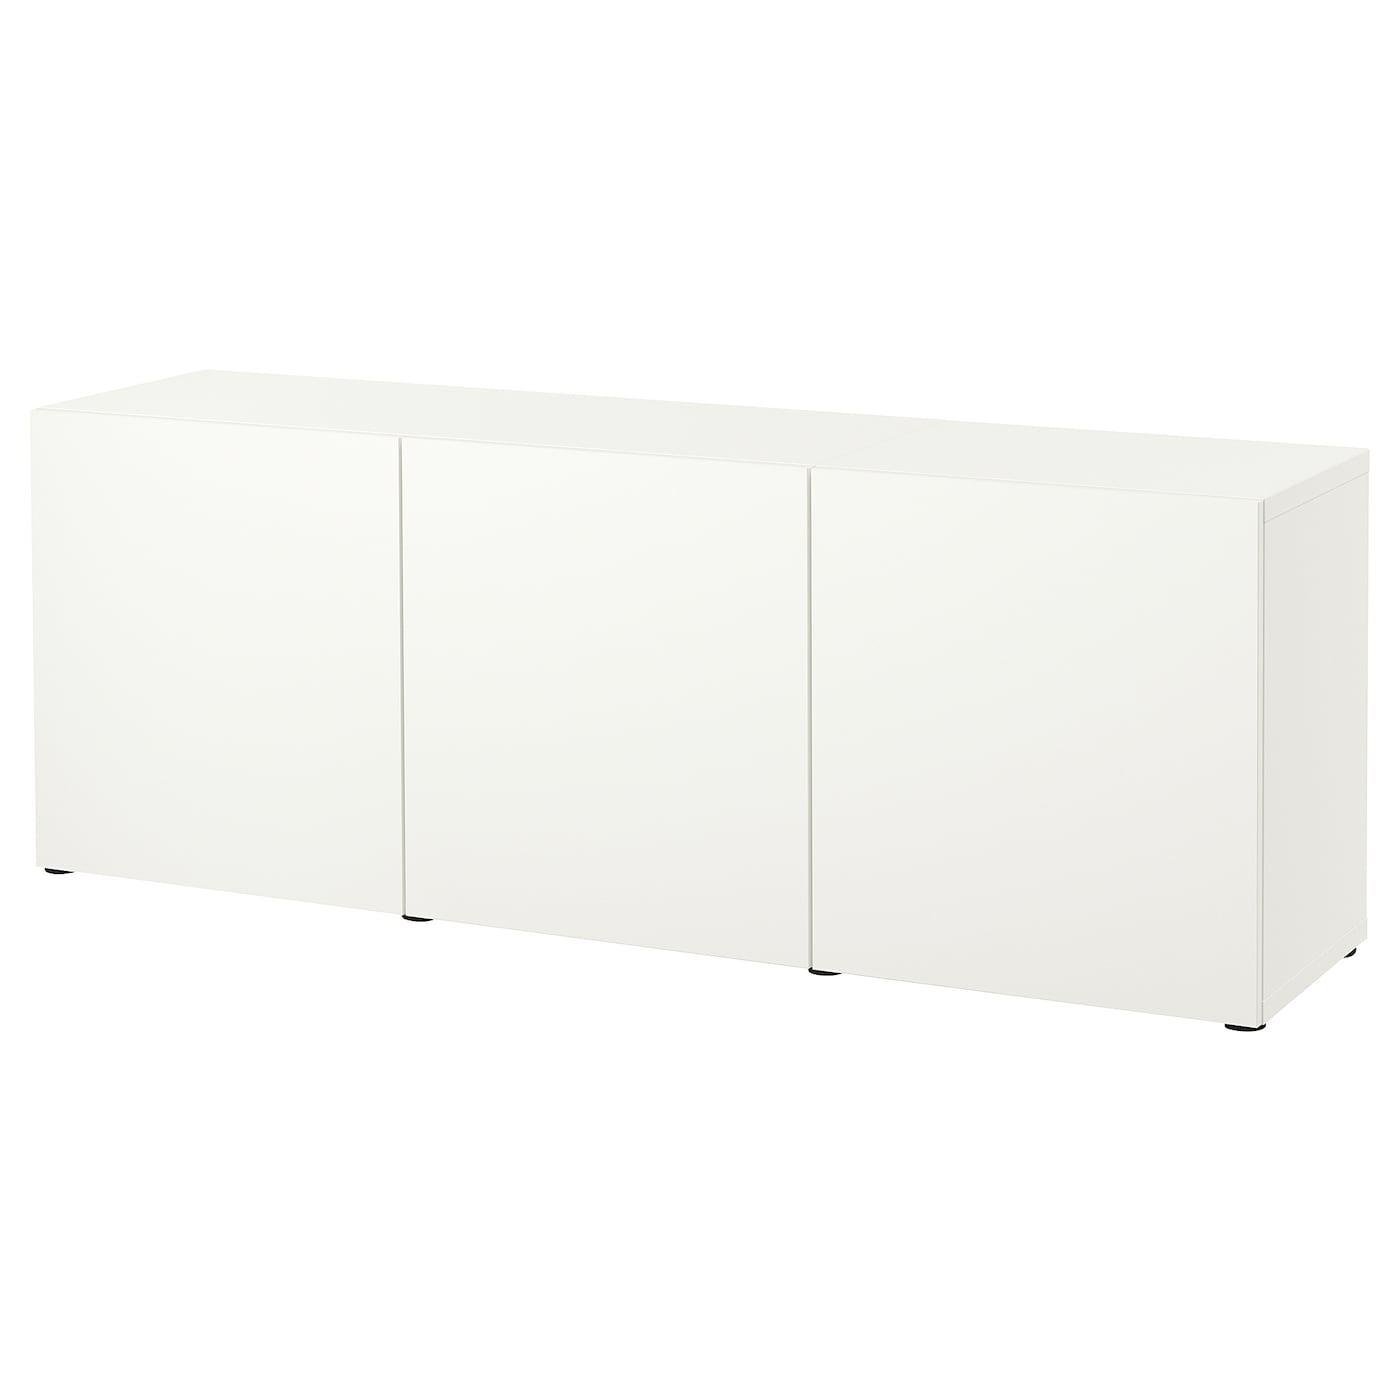 Комбинация для хранения - IKEA BESTÅ/BESTA, 180x42x65 см, белый, Беста/Бесто ИКЕА